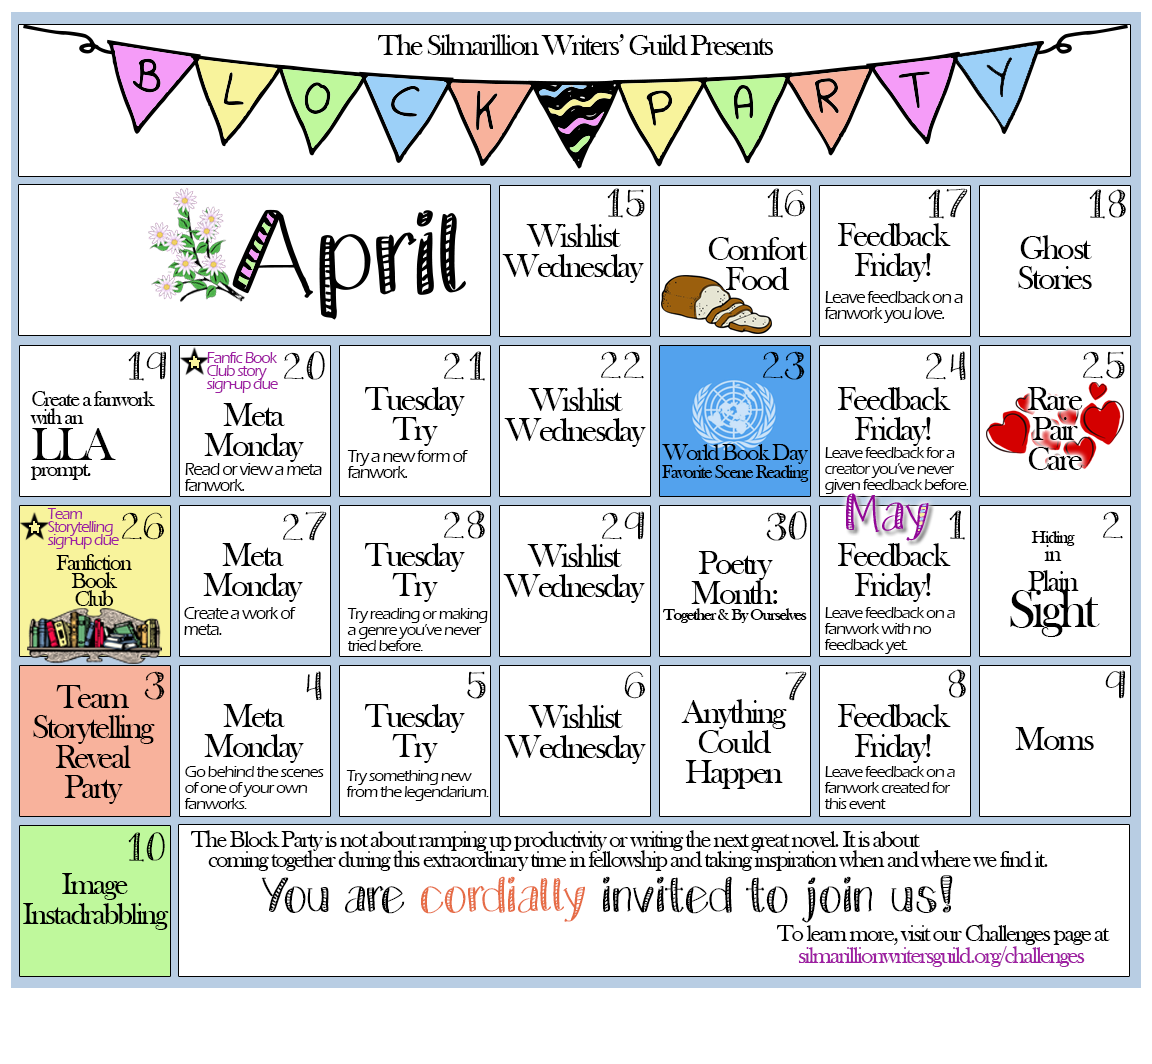 Block Party calendar - a text-only version of the calendar is below